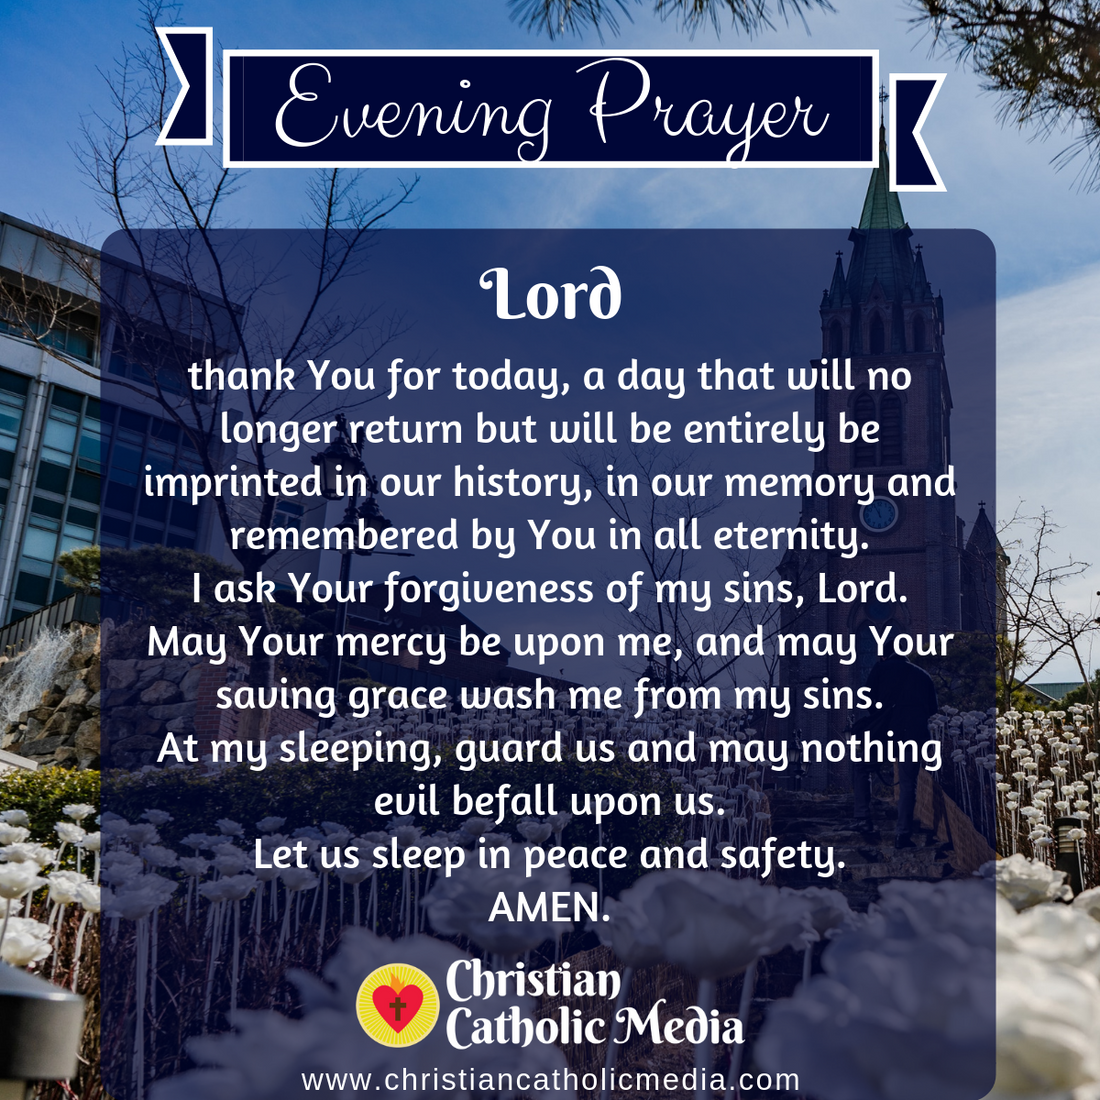 Evening Prayer Catholic Wednesday March 17, 2021